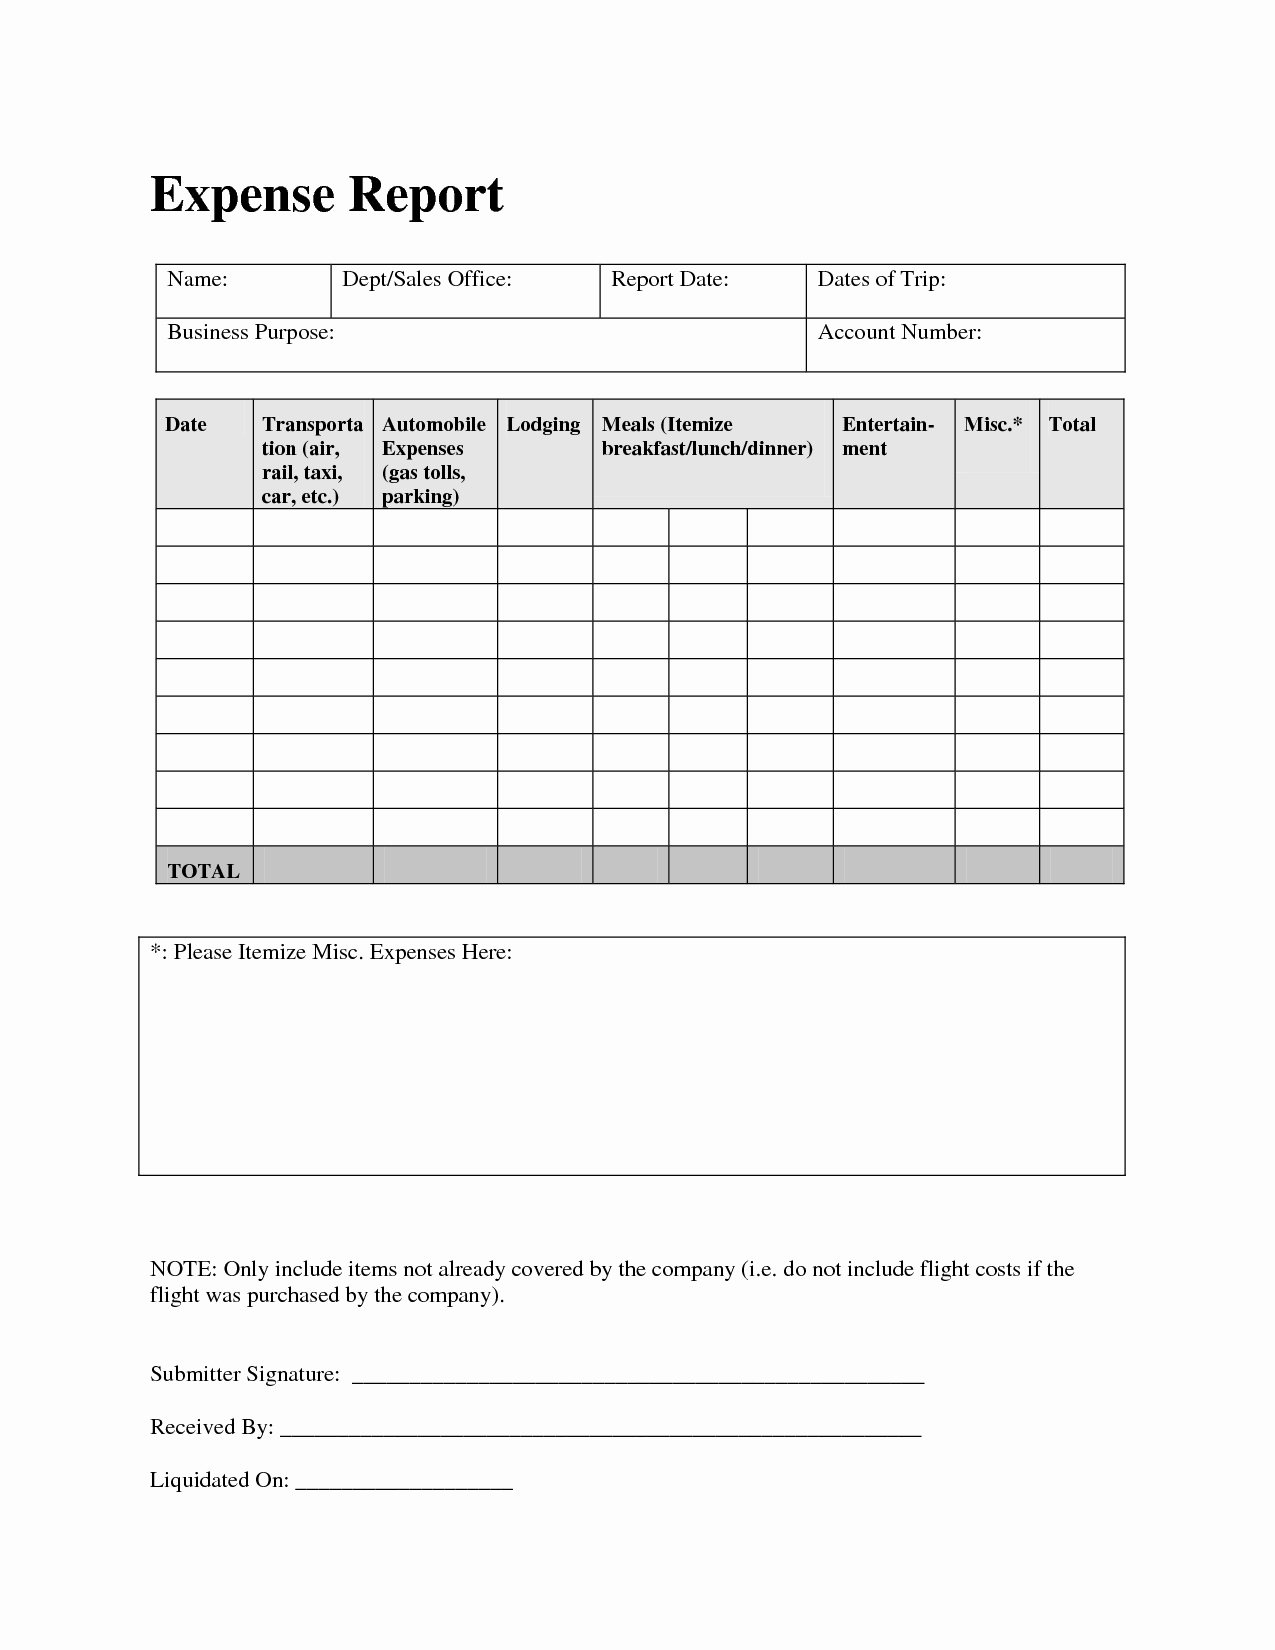 Basic Expense Report Template Fresh Outstanding Excel Expense Report Template by Whitecheese